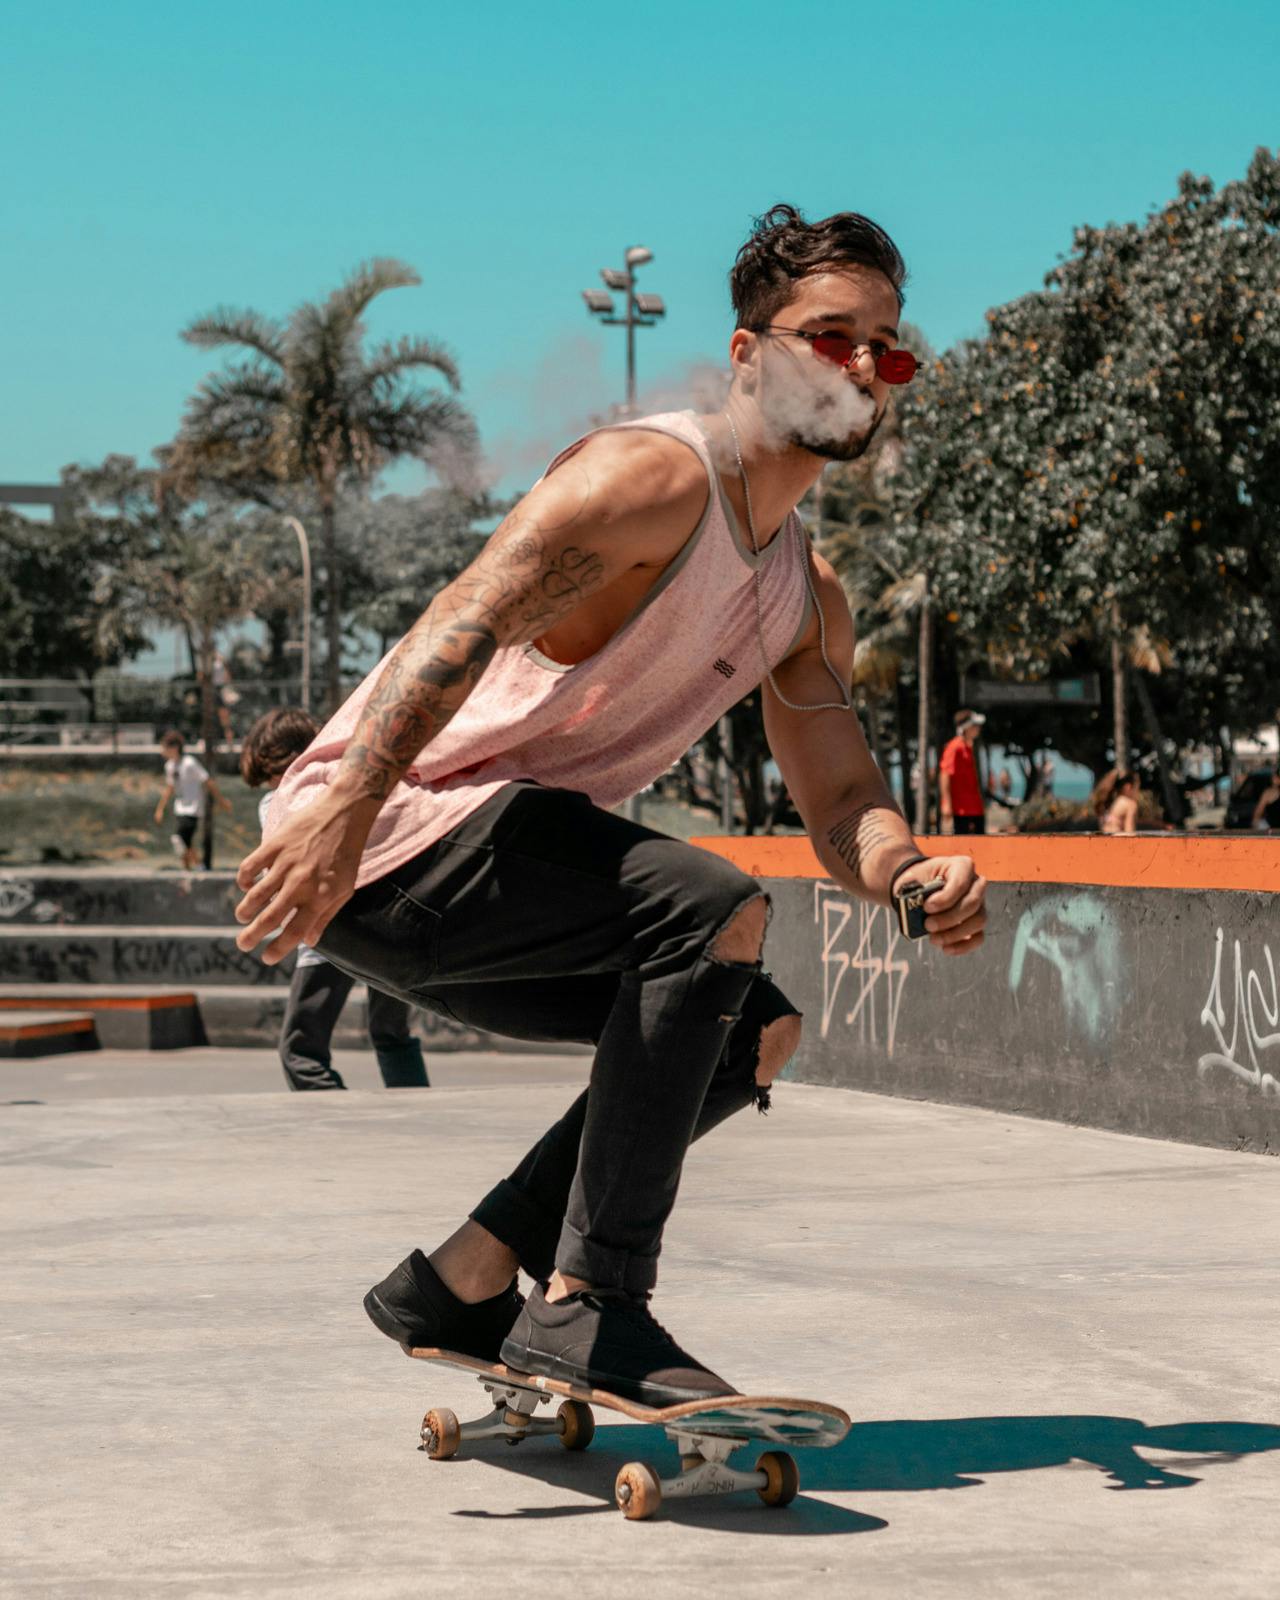 man vaping and skateboarding in urban setting 